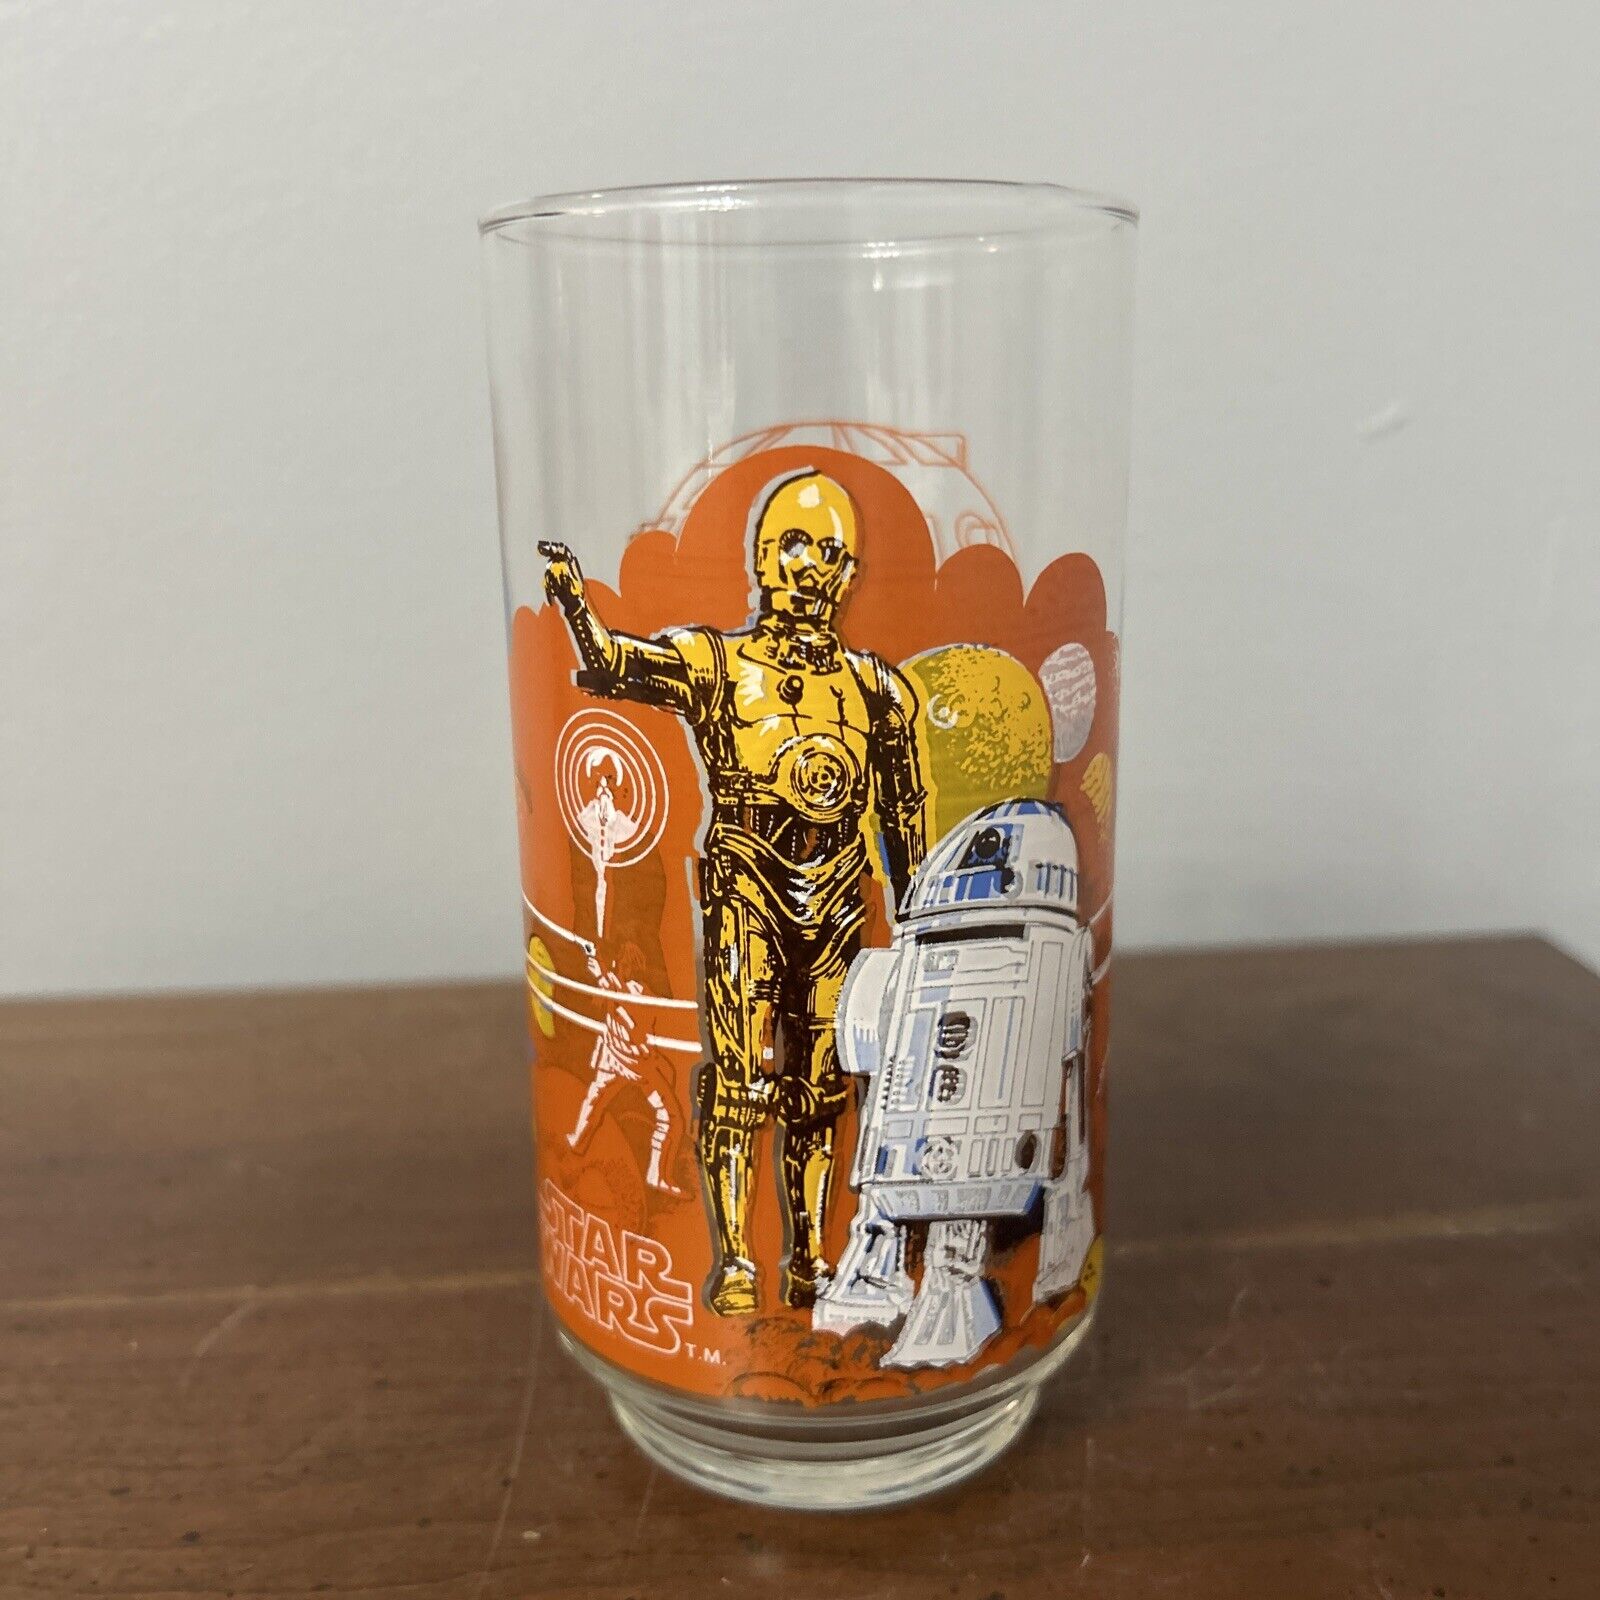 VINTAGE 1977 R2-D2 C-3PO STAR WARS BURGER KING DRINKING GLASS COCA-COLA 